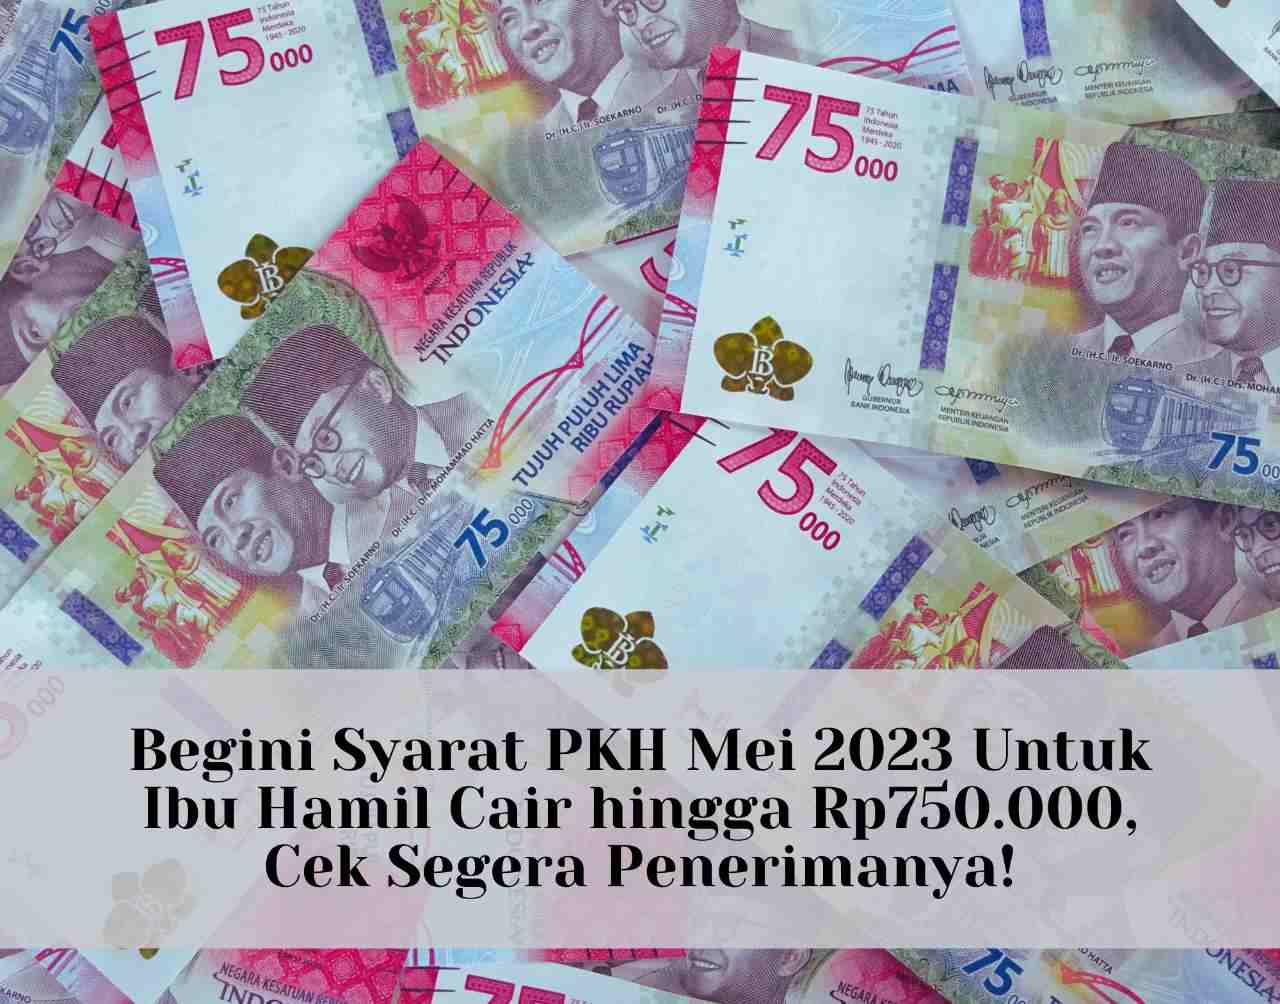 Begini Syarat PKH Mei 2023 Untuk Ibu Hamil Cair hingga Rp750.000, Cek Segera Penerimanya!